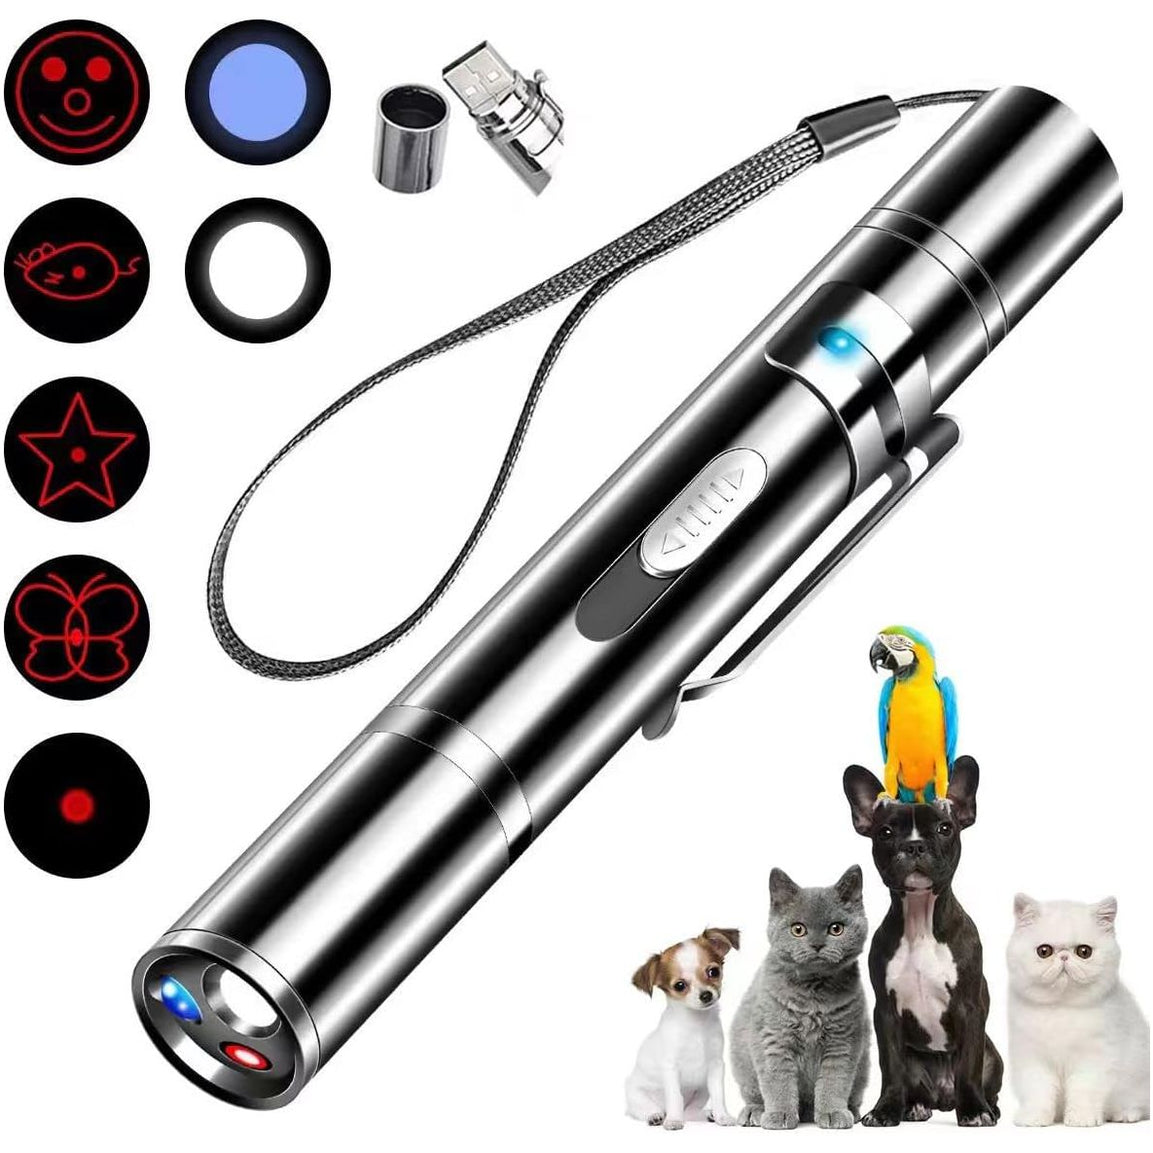 Danigh-buy Cat Pointer Toy,Dog Laser Pointer,7 Adjustable Patterns Laser  3 Modes